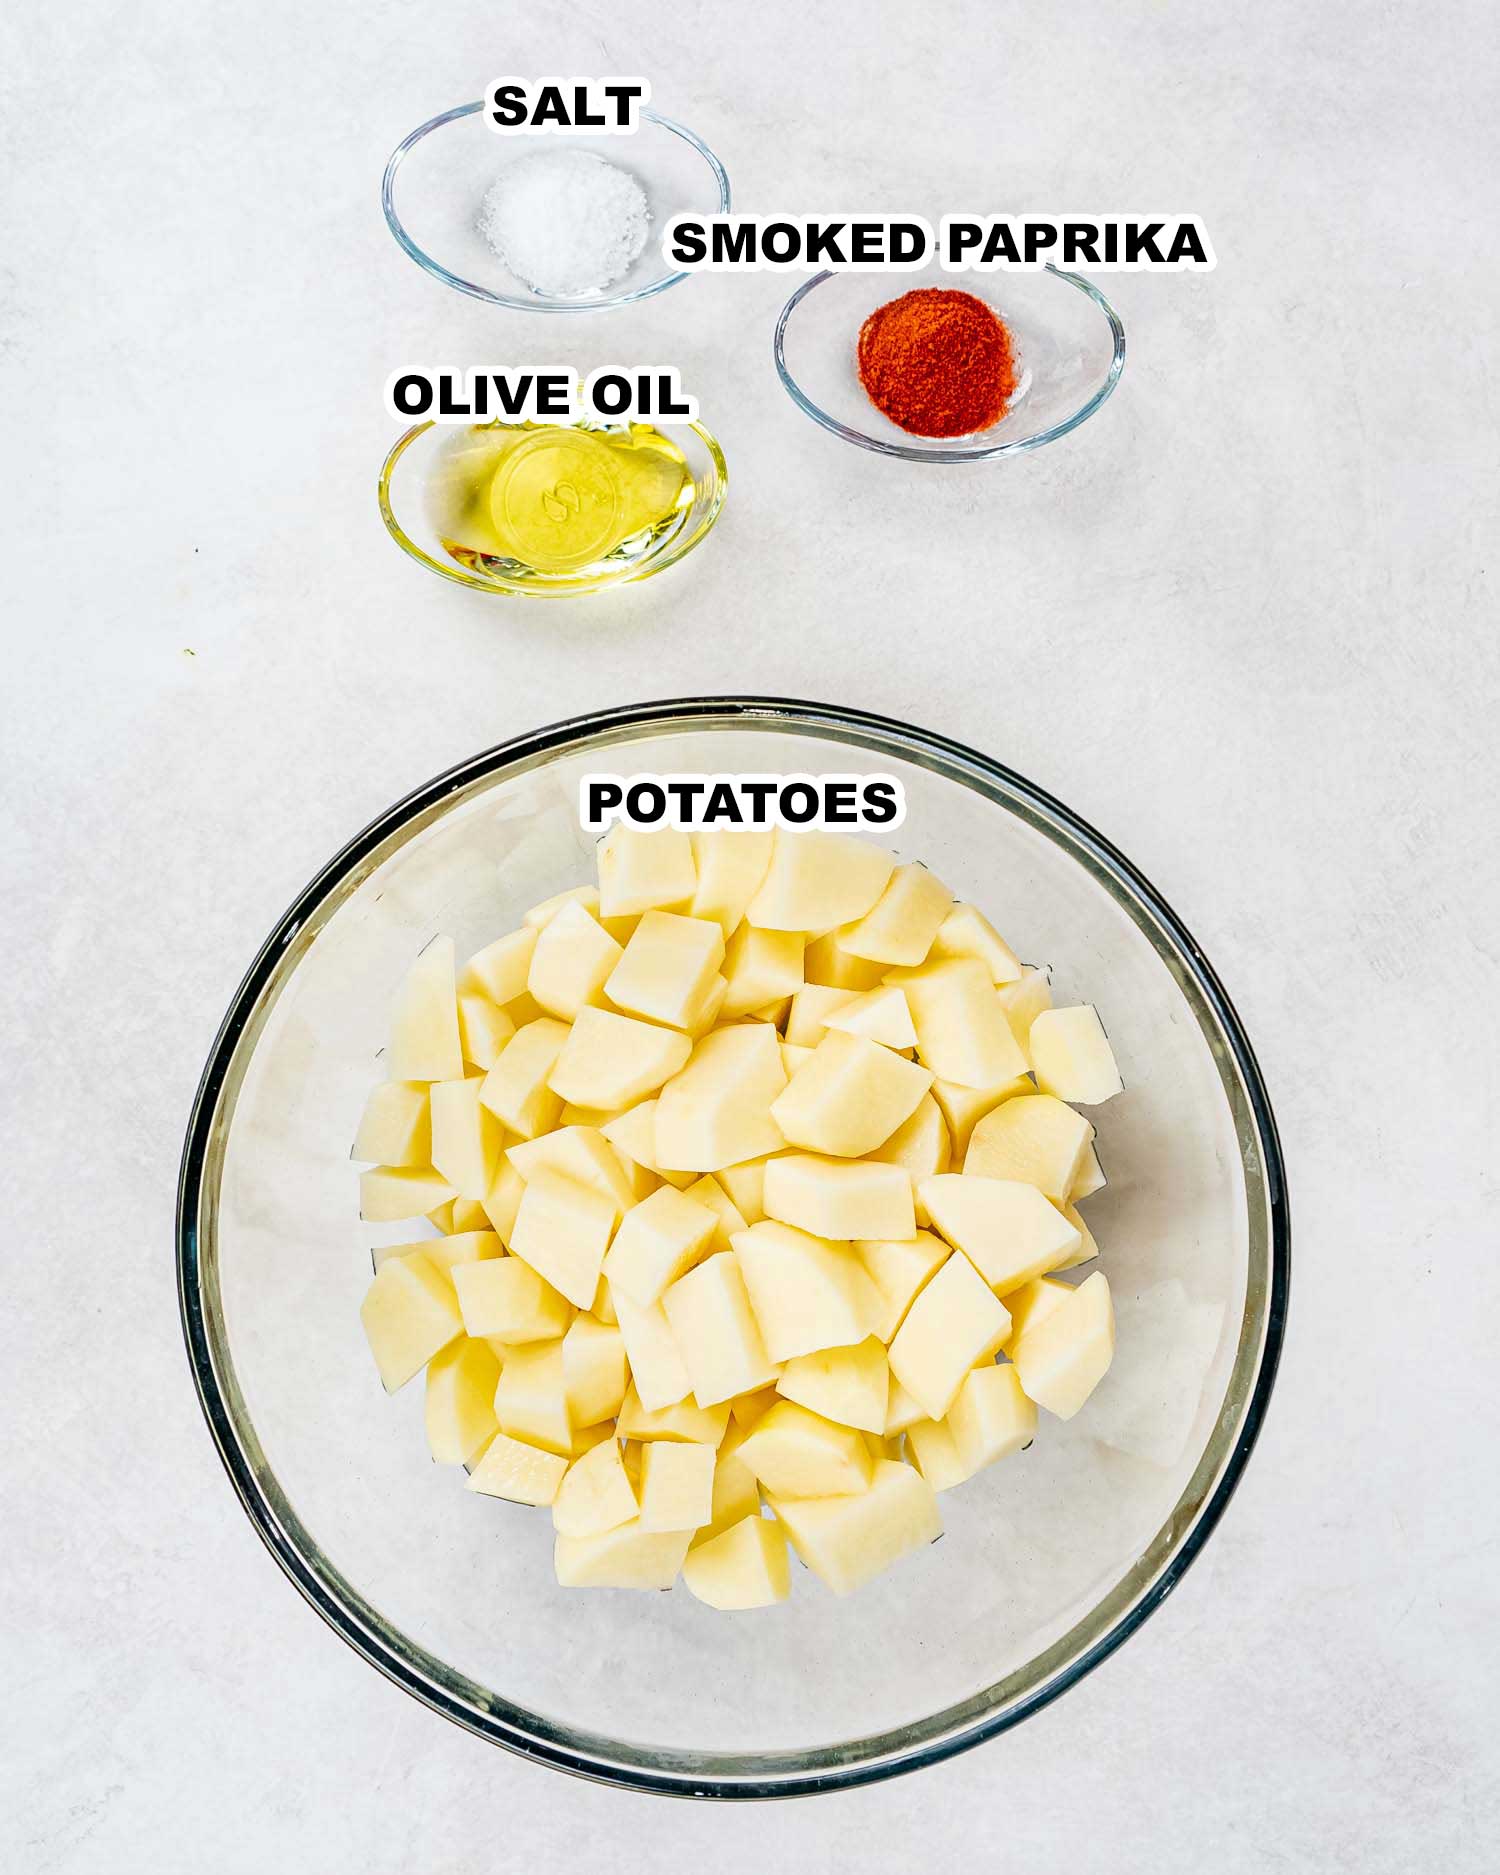 ingredients needed to make patatas bravas.